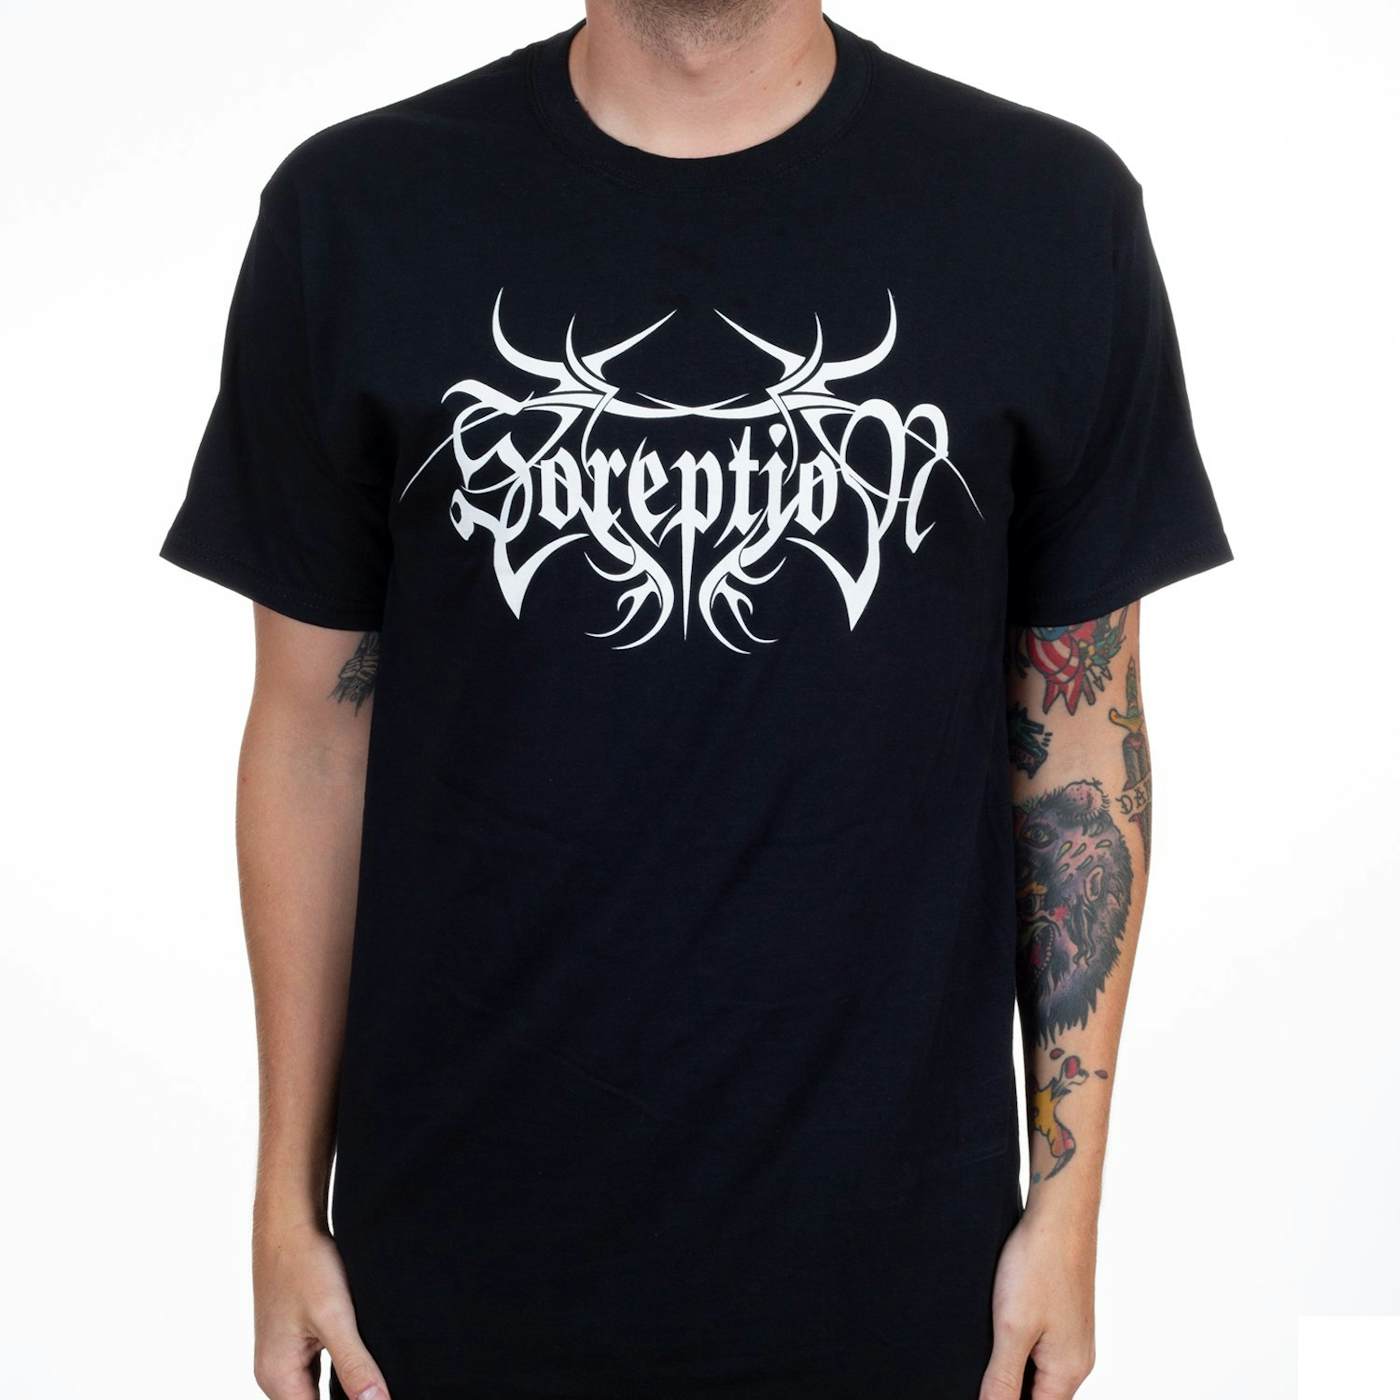 Soreption "Logo" T-Shirt